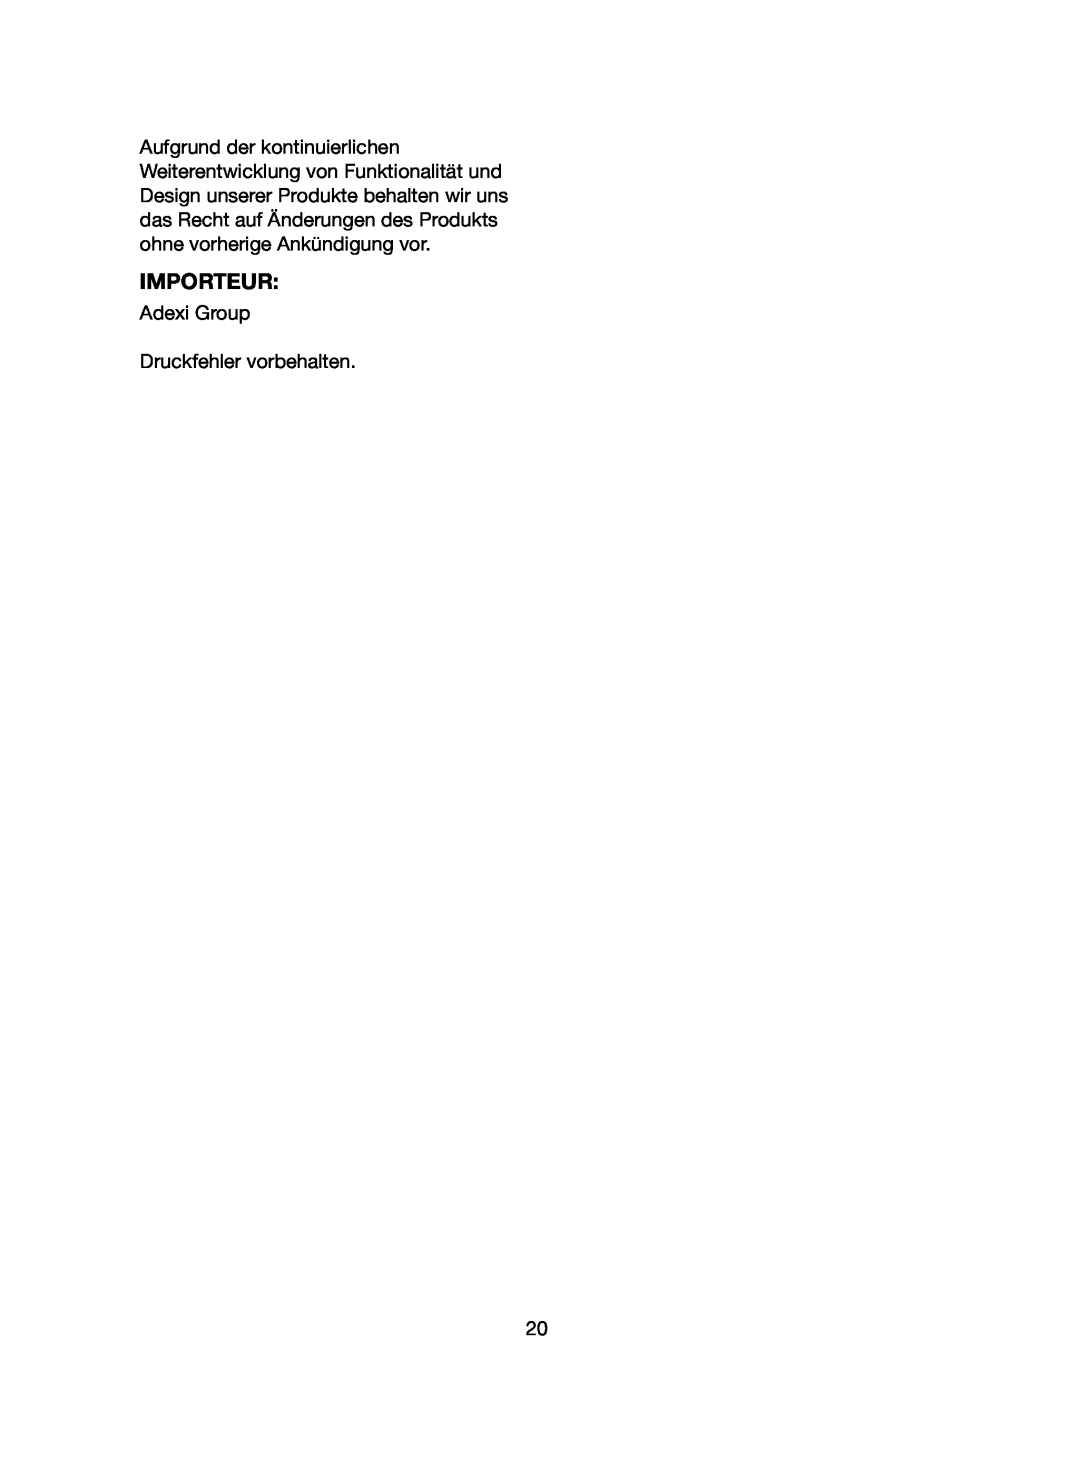 Melissa 640-107 manual Importeur, Adexi Group Druckfehler vorbehalten 